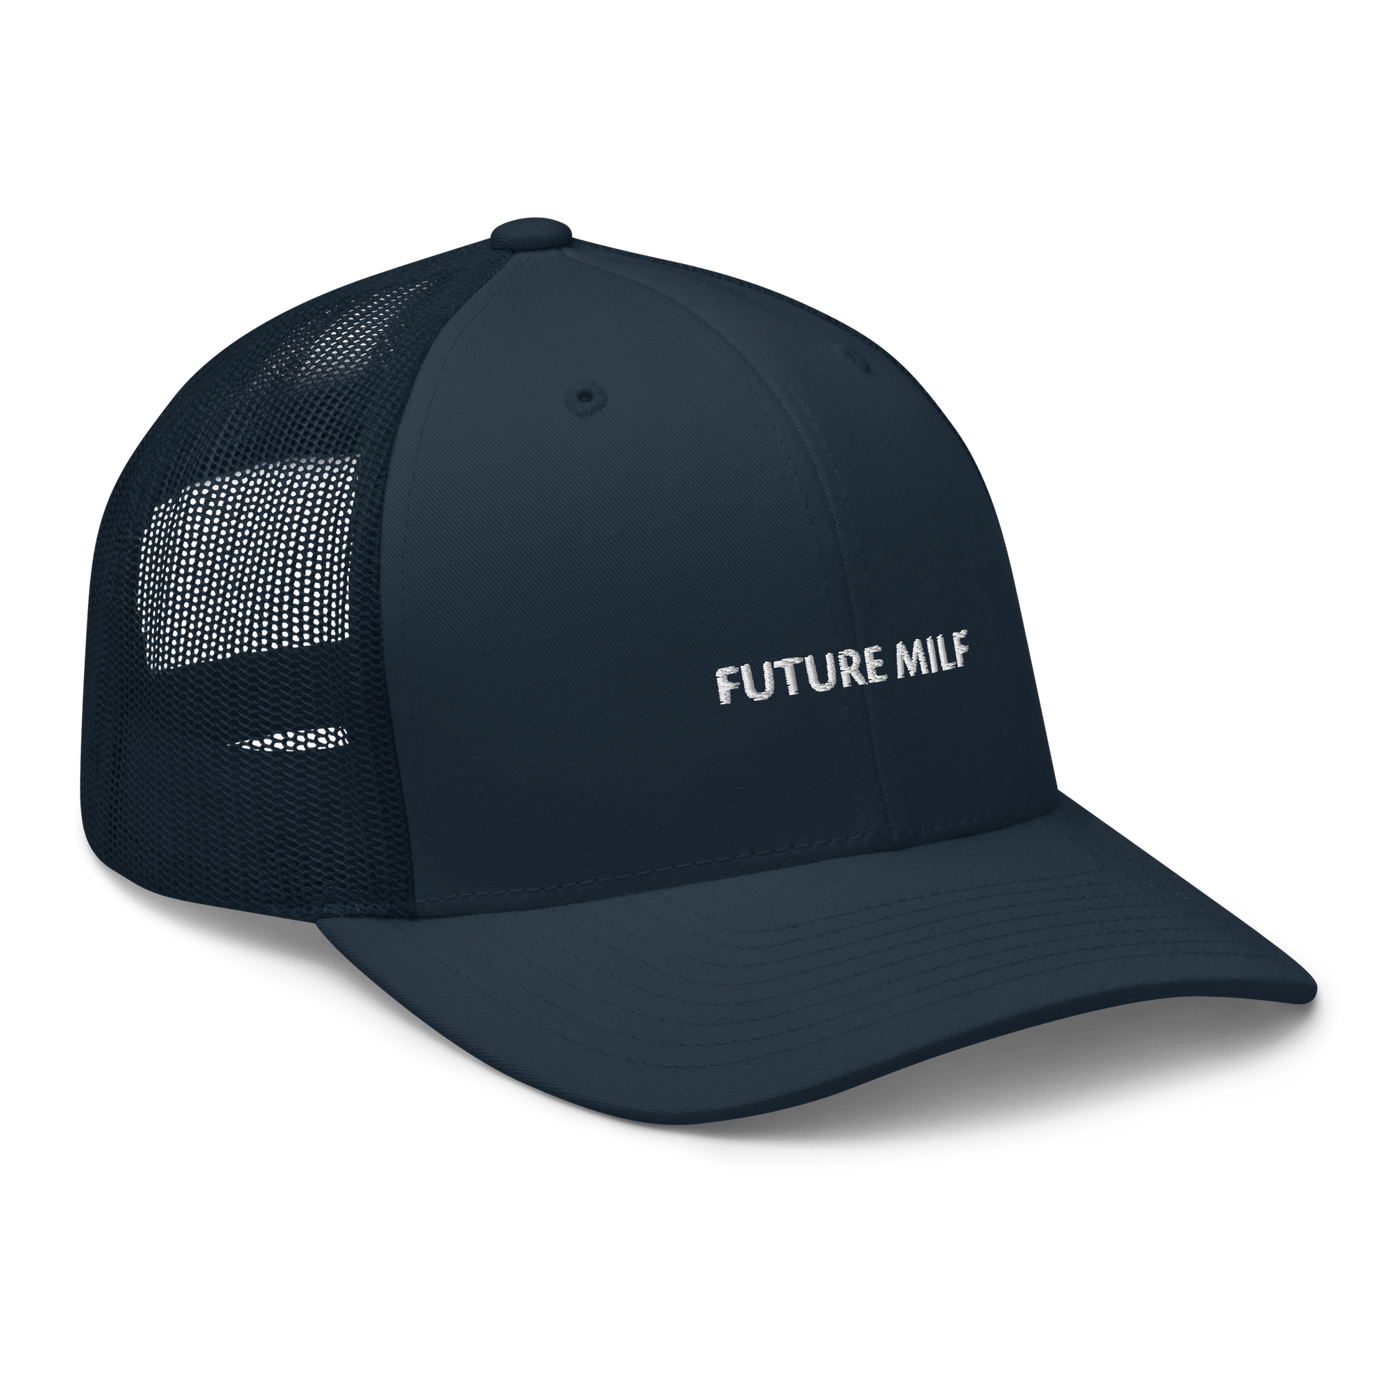 Future Milf Trucker Cap - Navy - - Just Another Cap Store